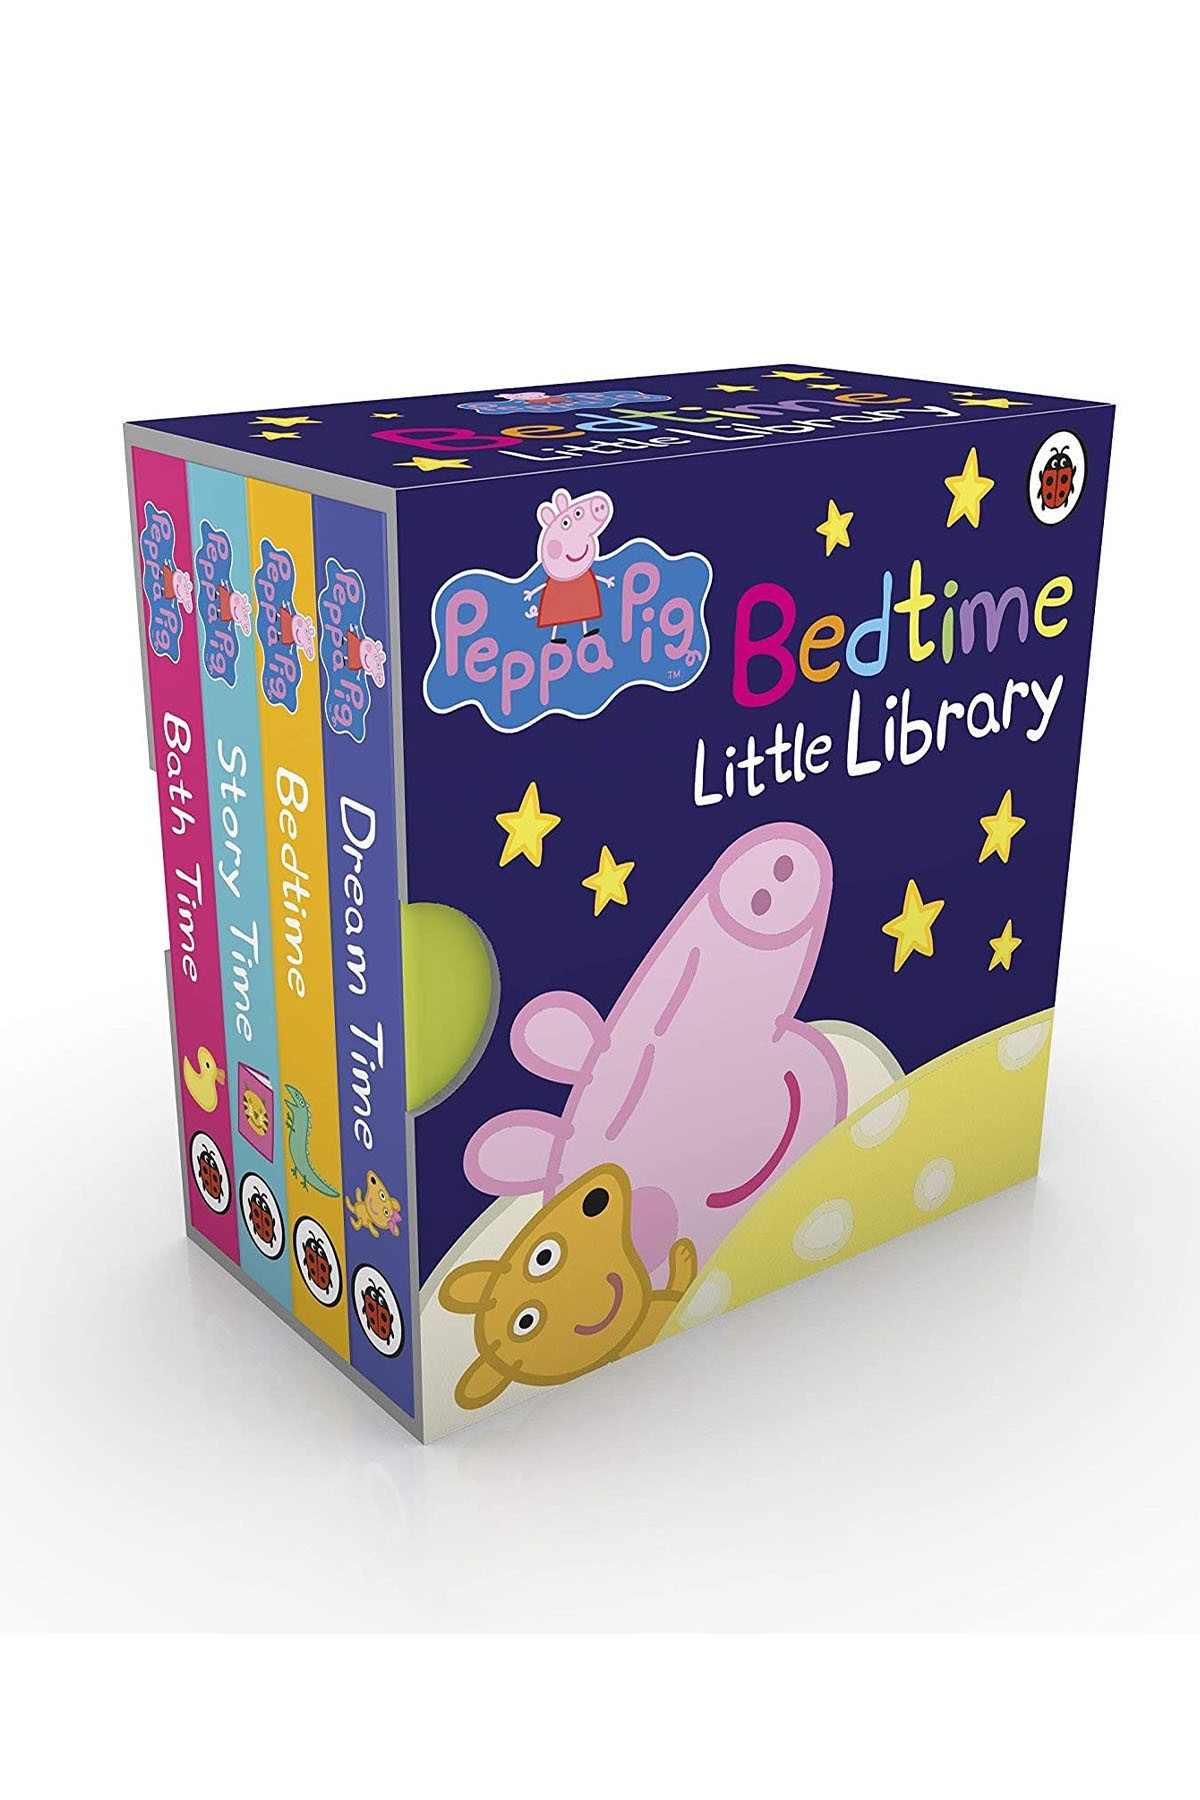 PRH Childrens - Peppa Pig: Bedtime Little Library